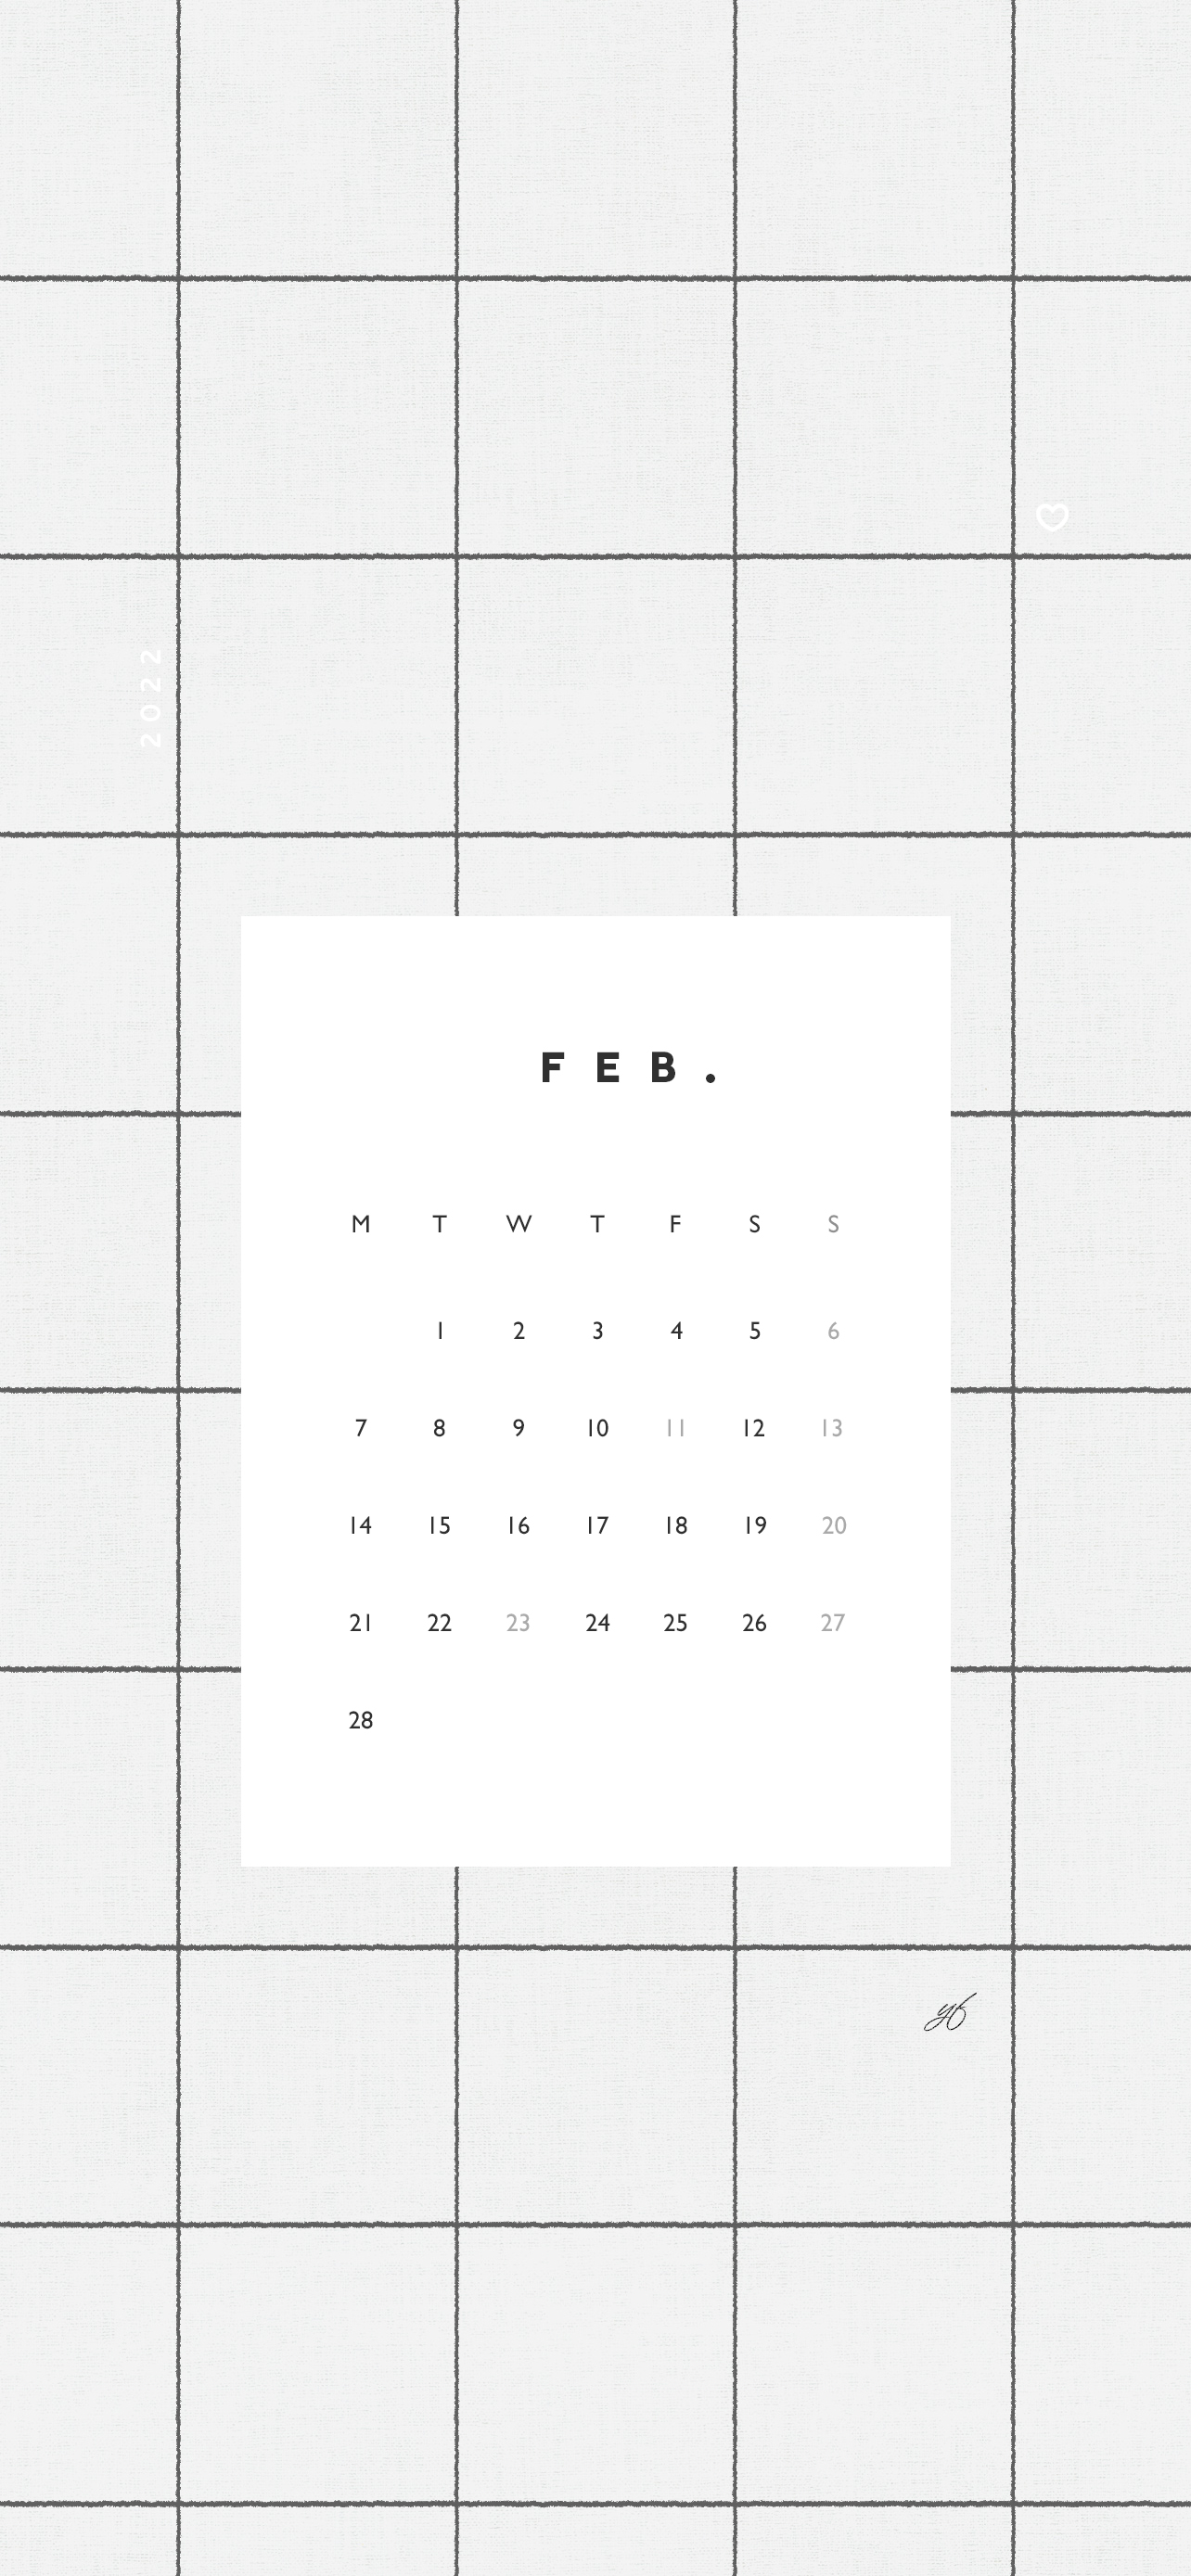 February 22 Calendar Wallpaper For The Iphone Design By Yf